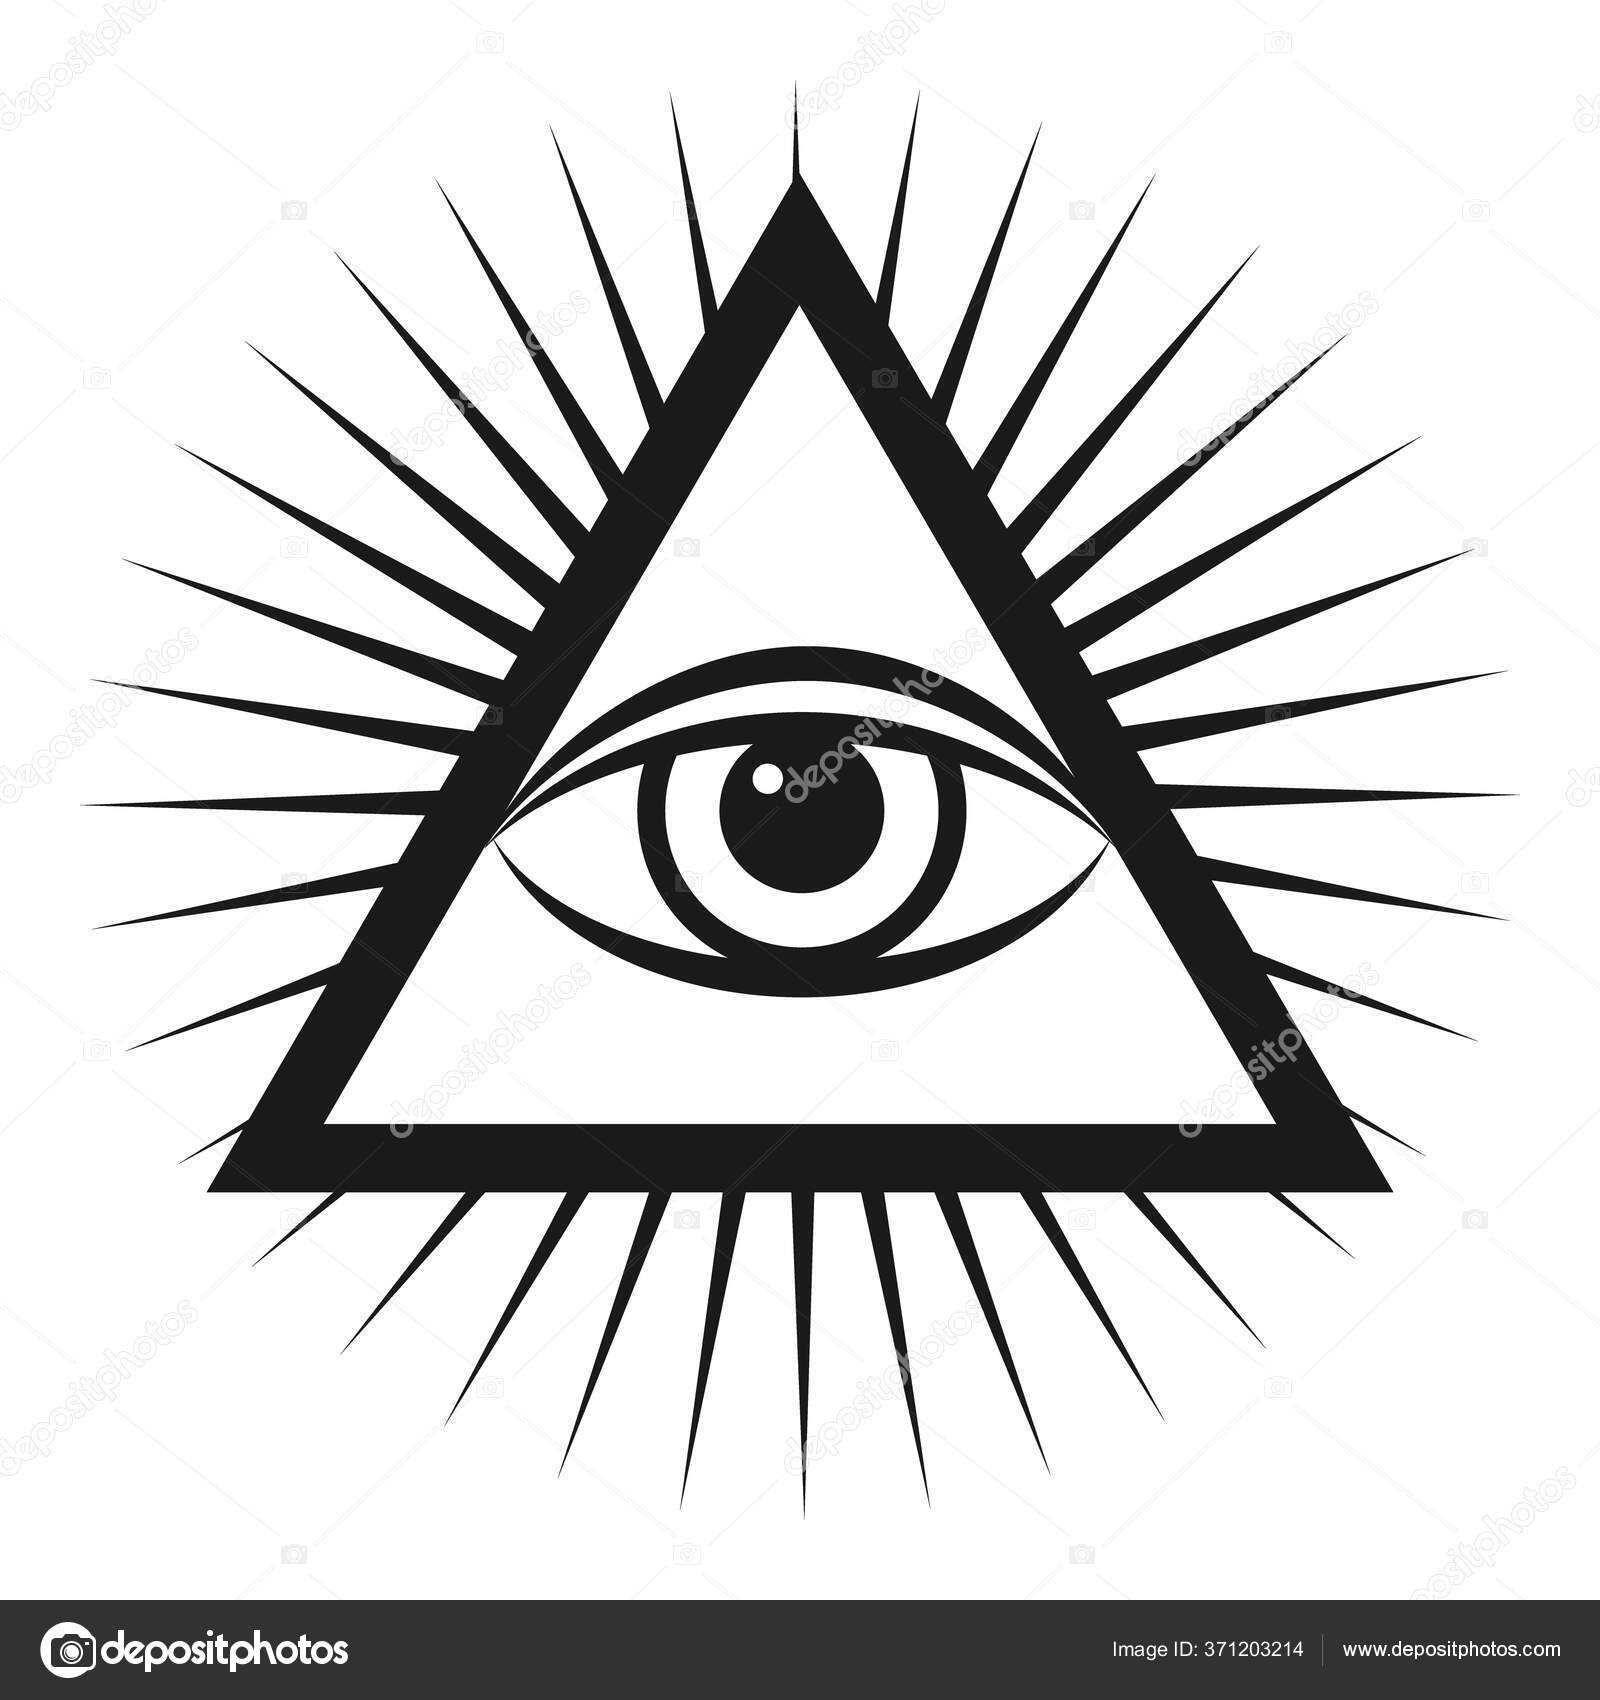 https://st3.depositphotos.com/11410994/37120/v/1600/depositphotos_371203214-stock-illustration-masonic-symbol-all-seeing-eye.jpg